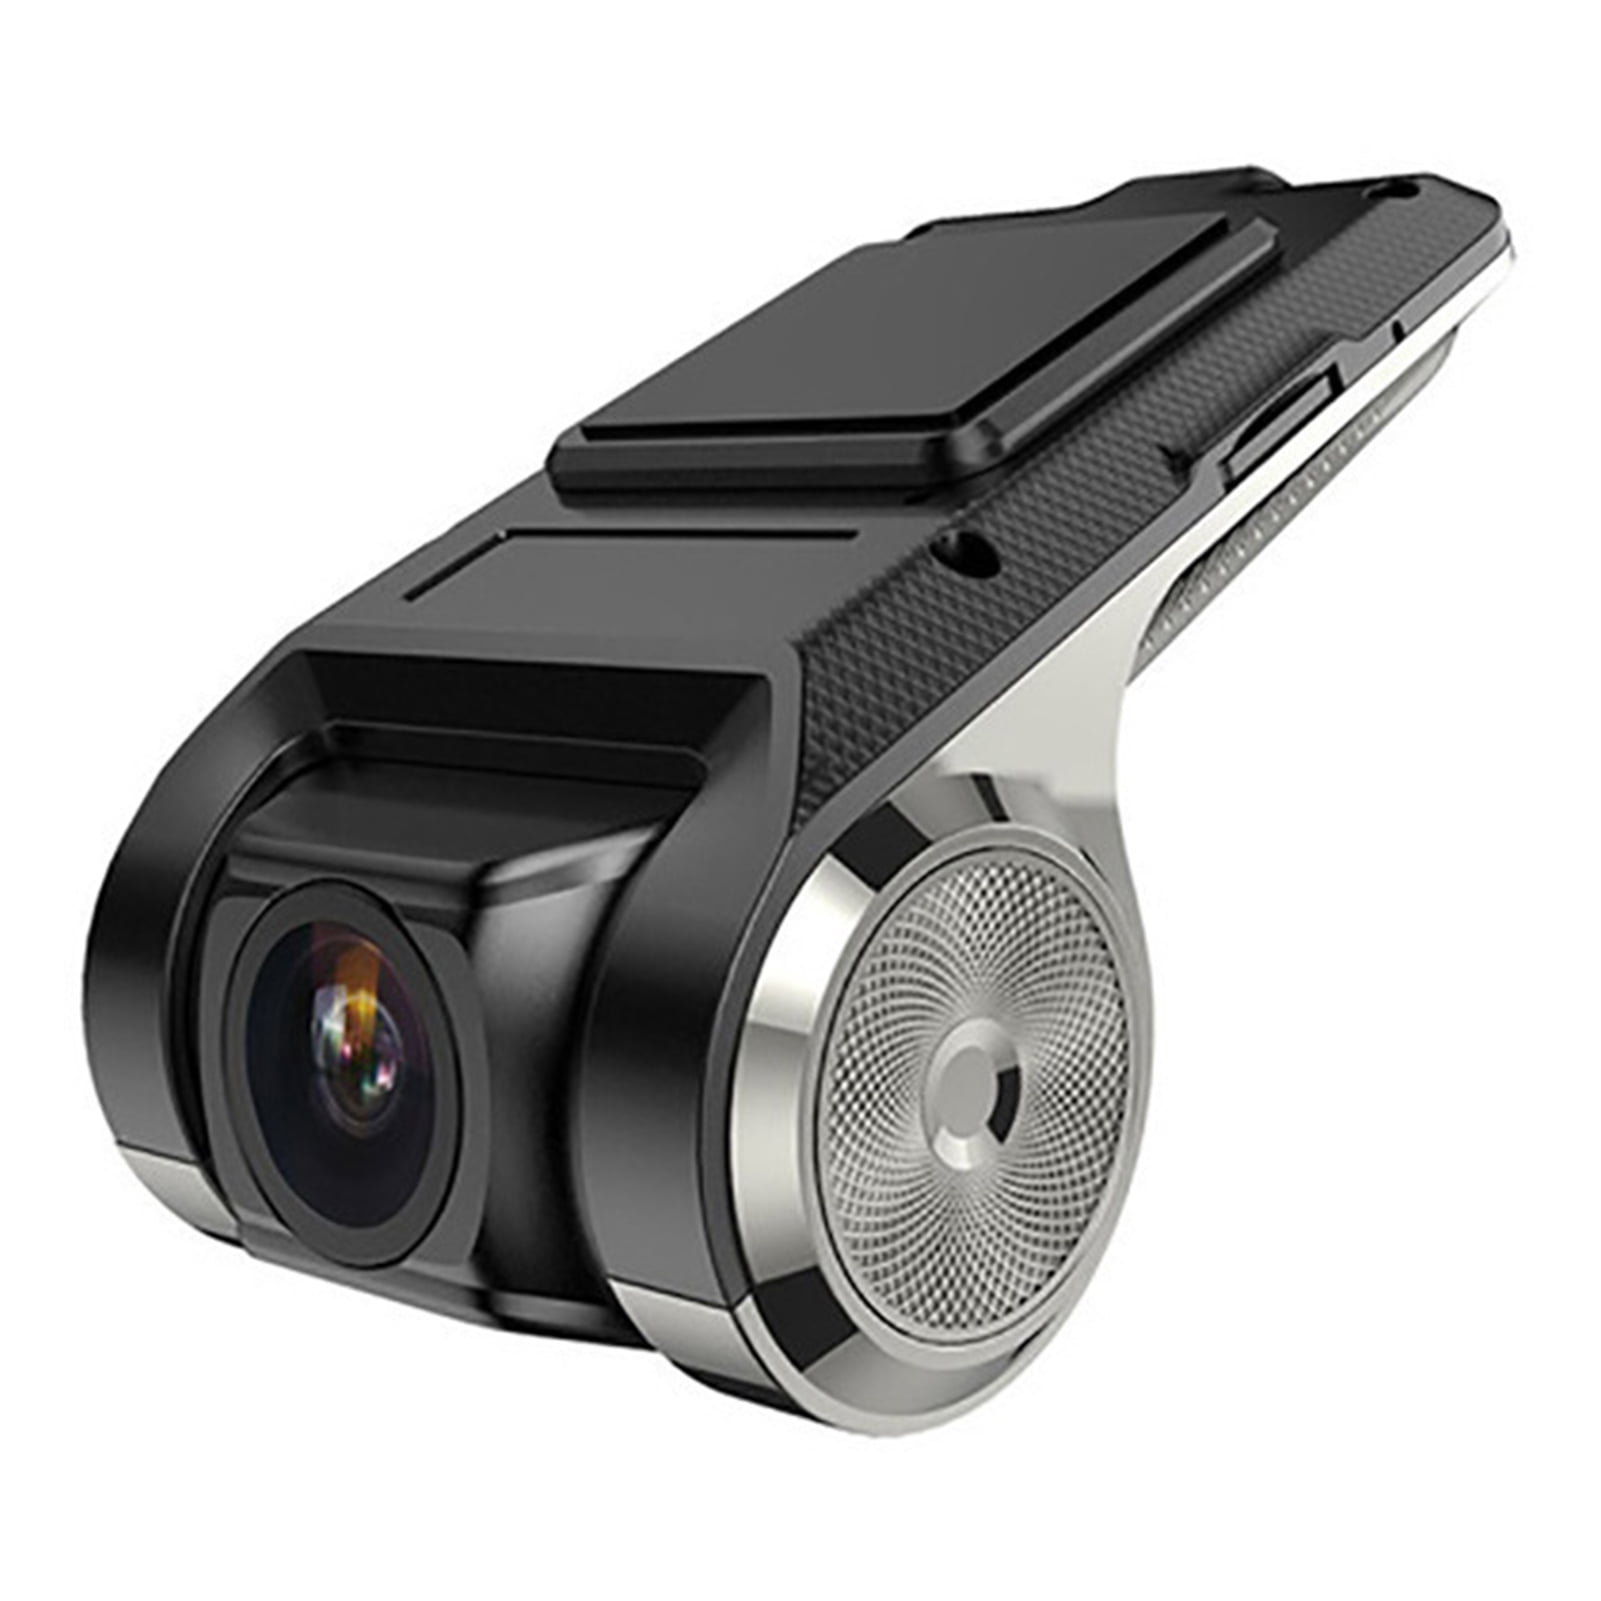 1280x720 In Car DVR Dash Camera USB Mini Recorder with ADAS (DVR030S)